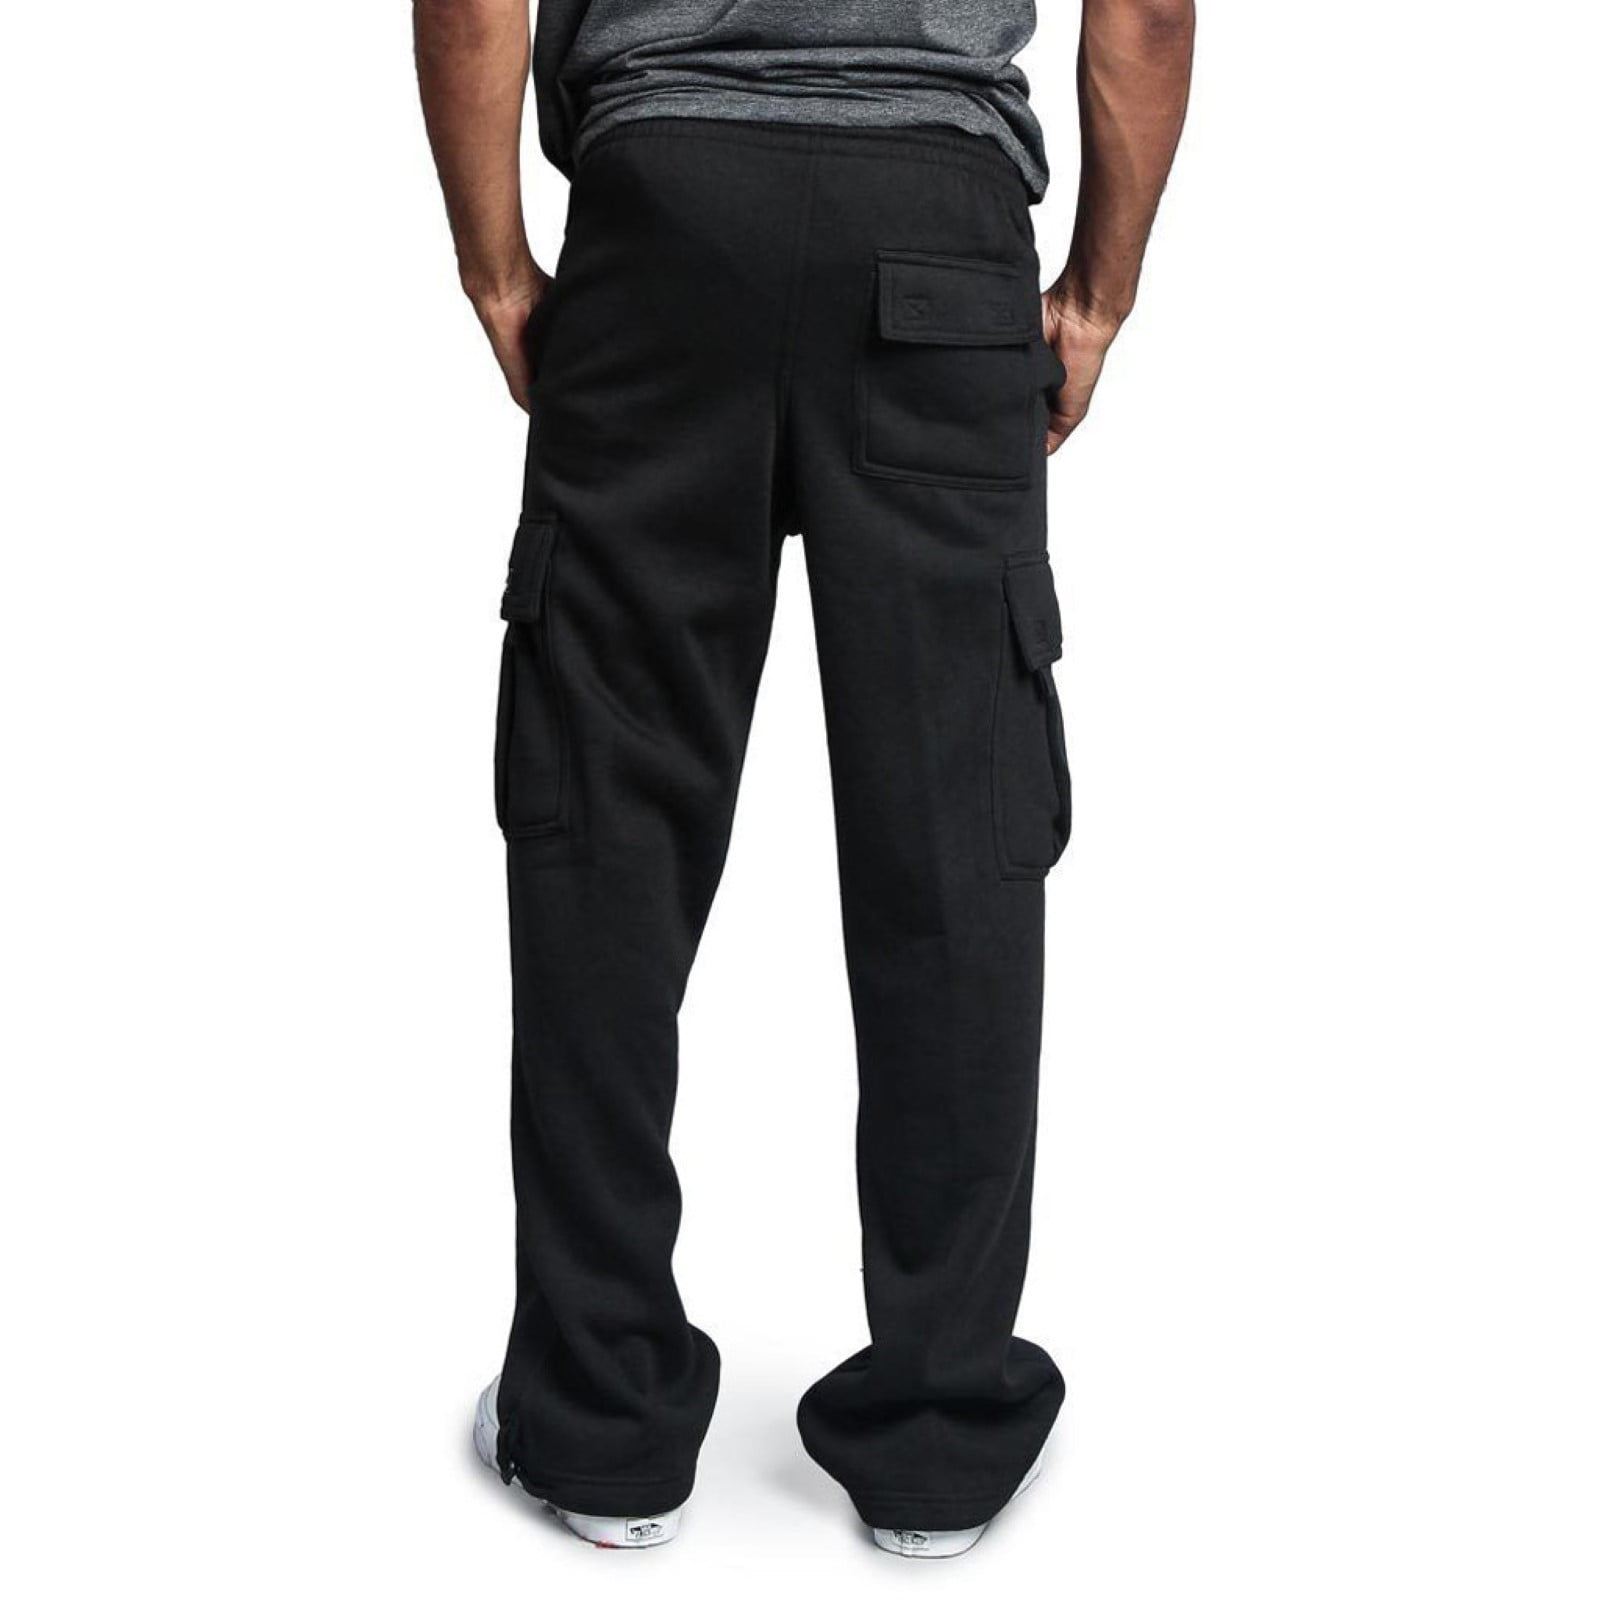 Gubotare Mens Cargo Pants Men's Tech Mesh Gym Workout Open Bottom  Sweatpants with Pockets,Black L